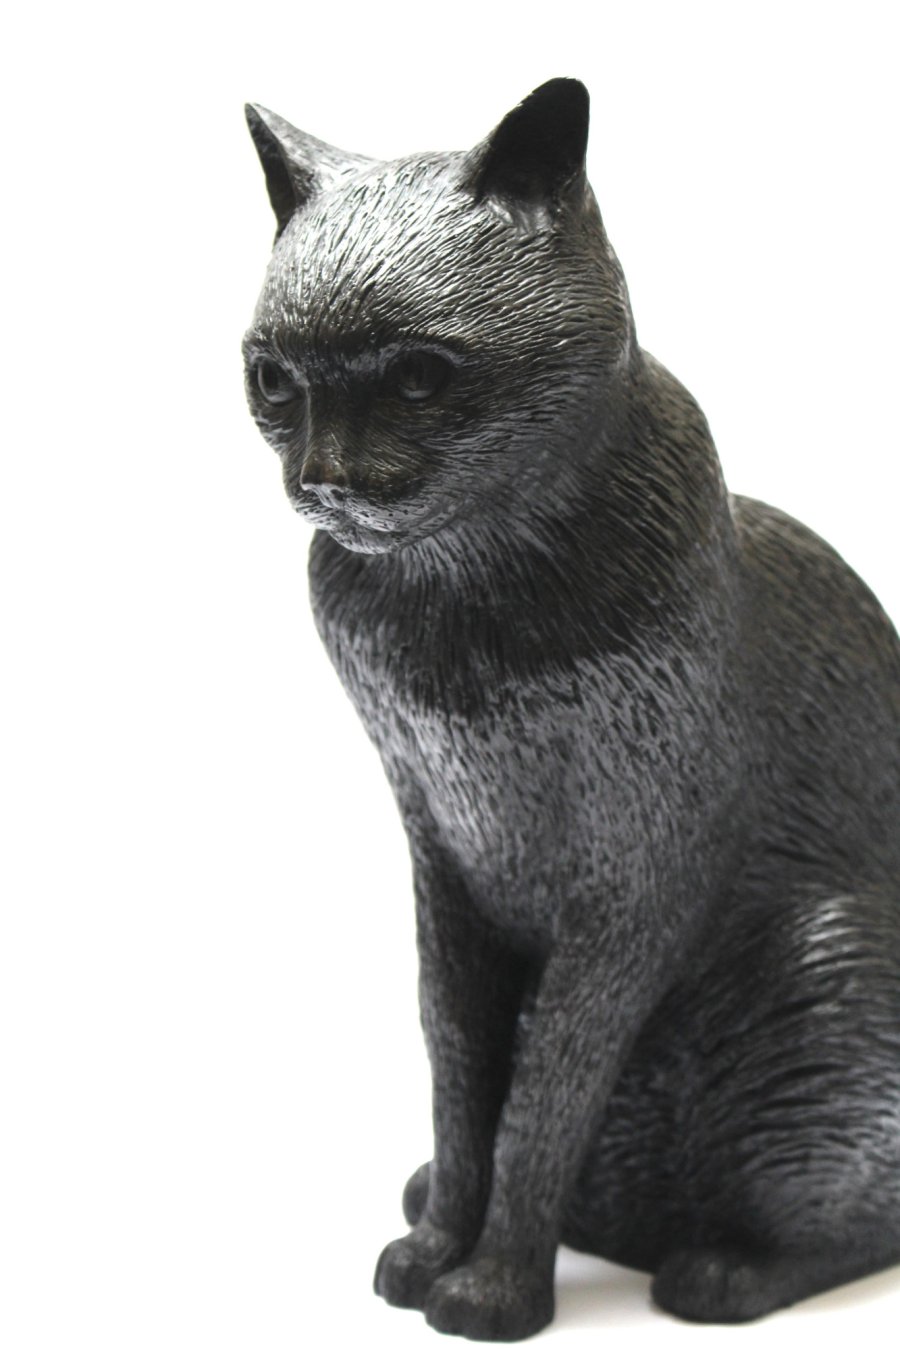 Bronze sculpture of a cat